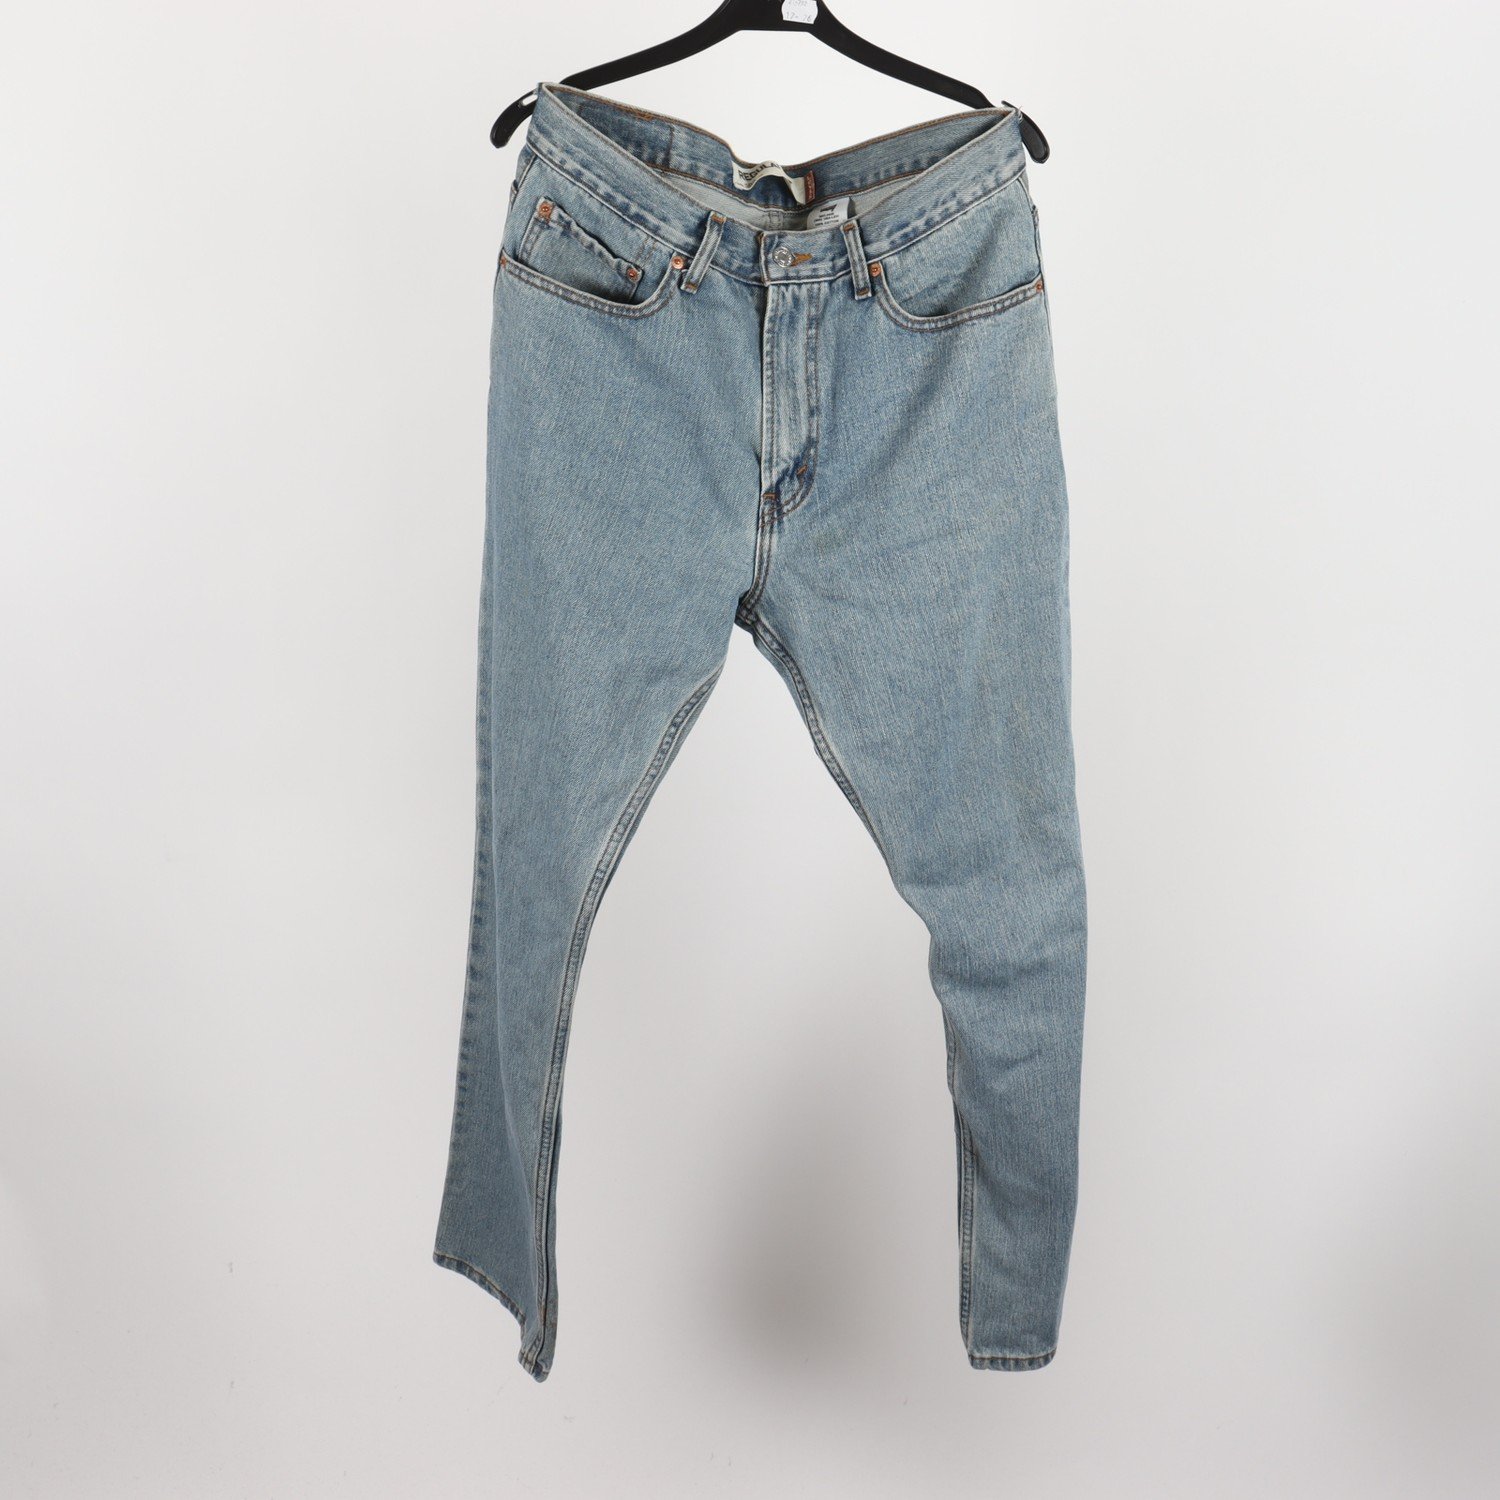 Jeans, Levi’s 505, stl. 33/32